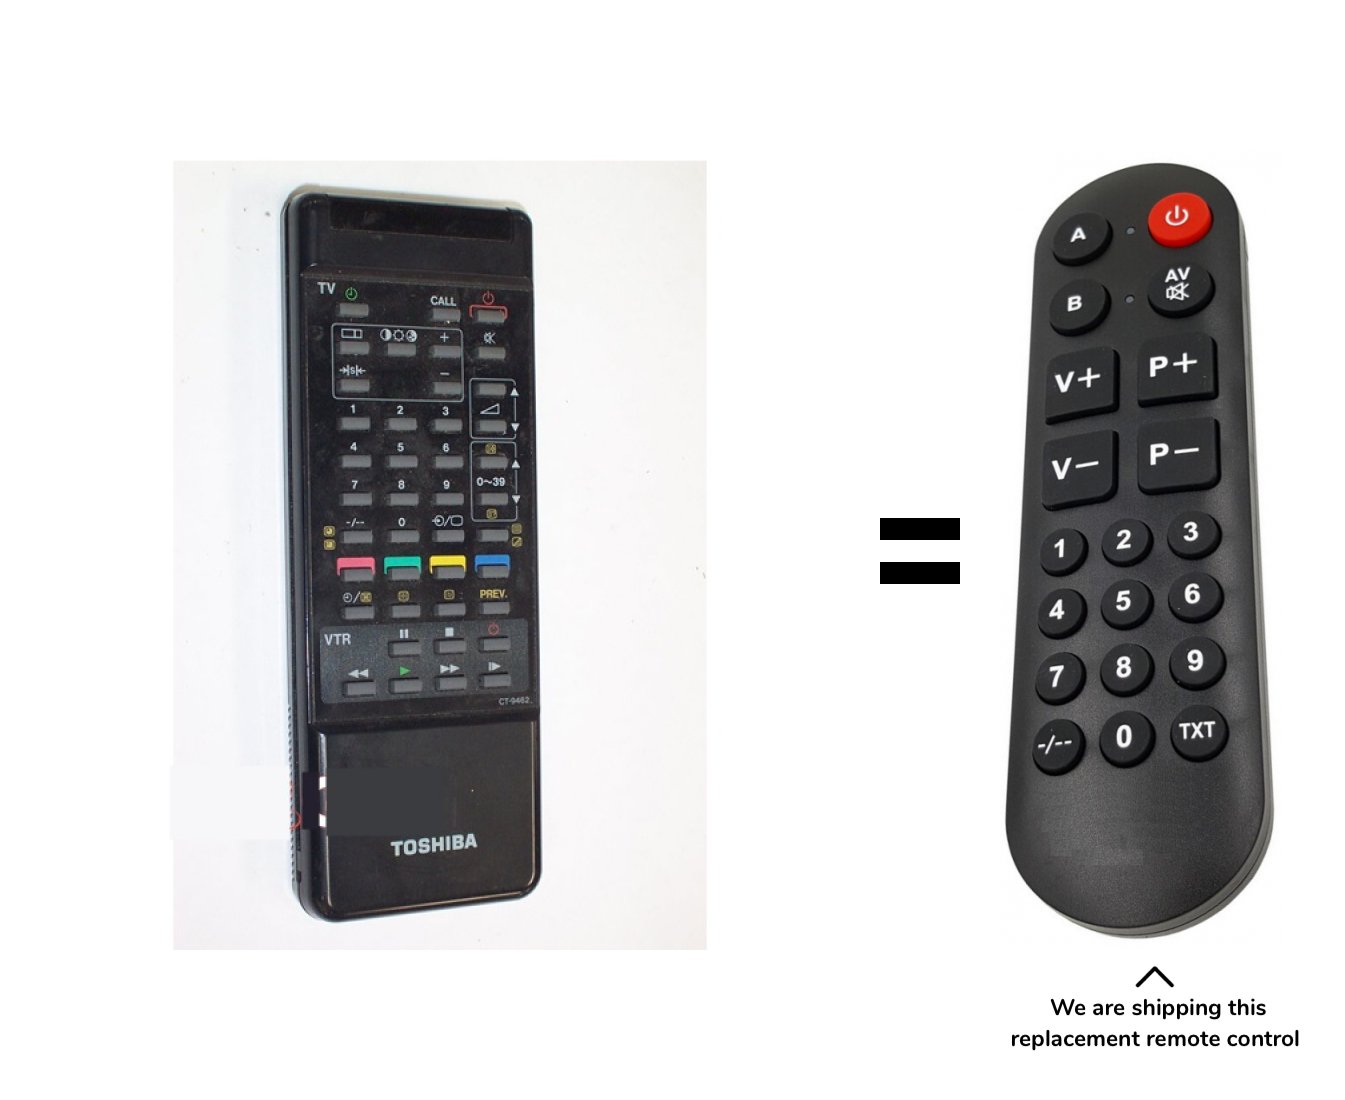 Toshiba 1400RT remote control for seniors